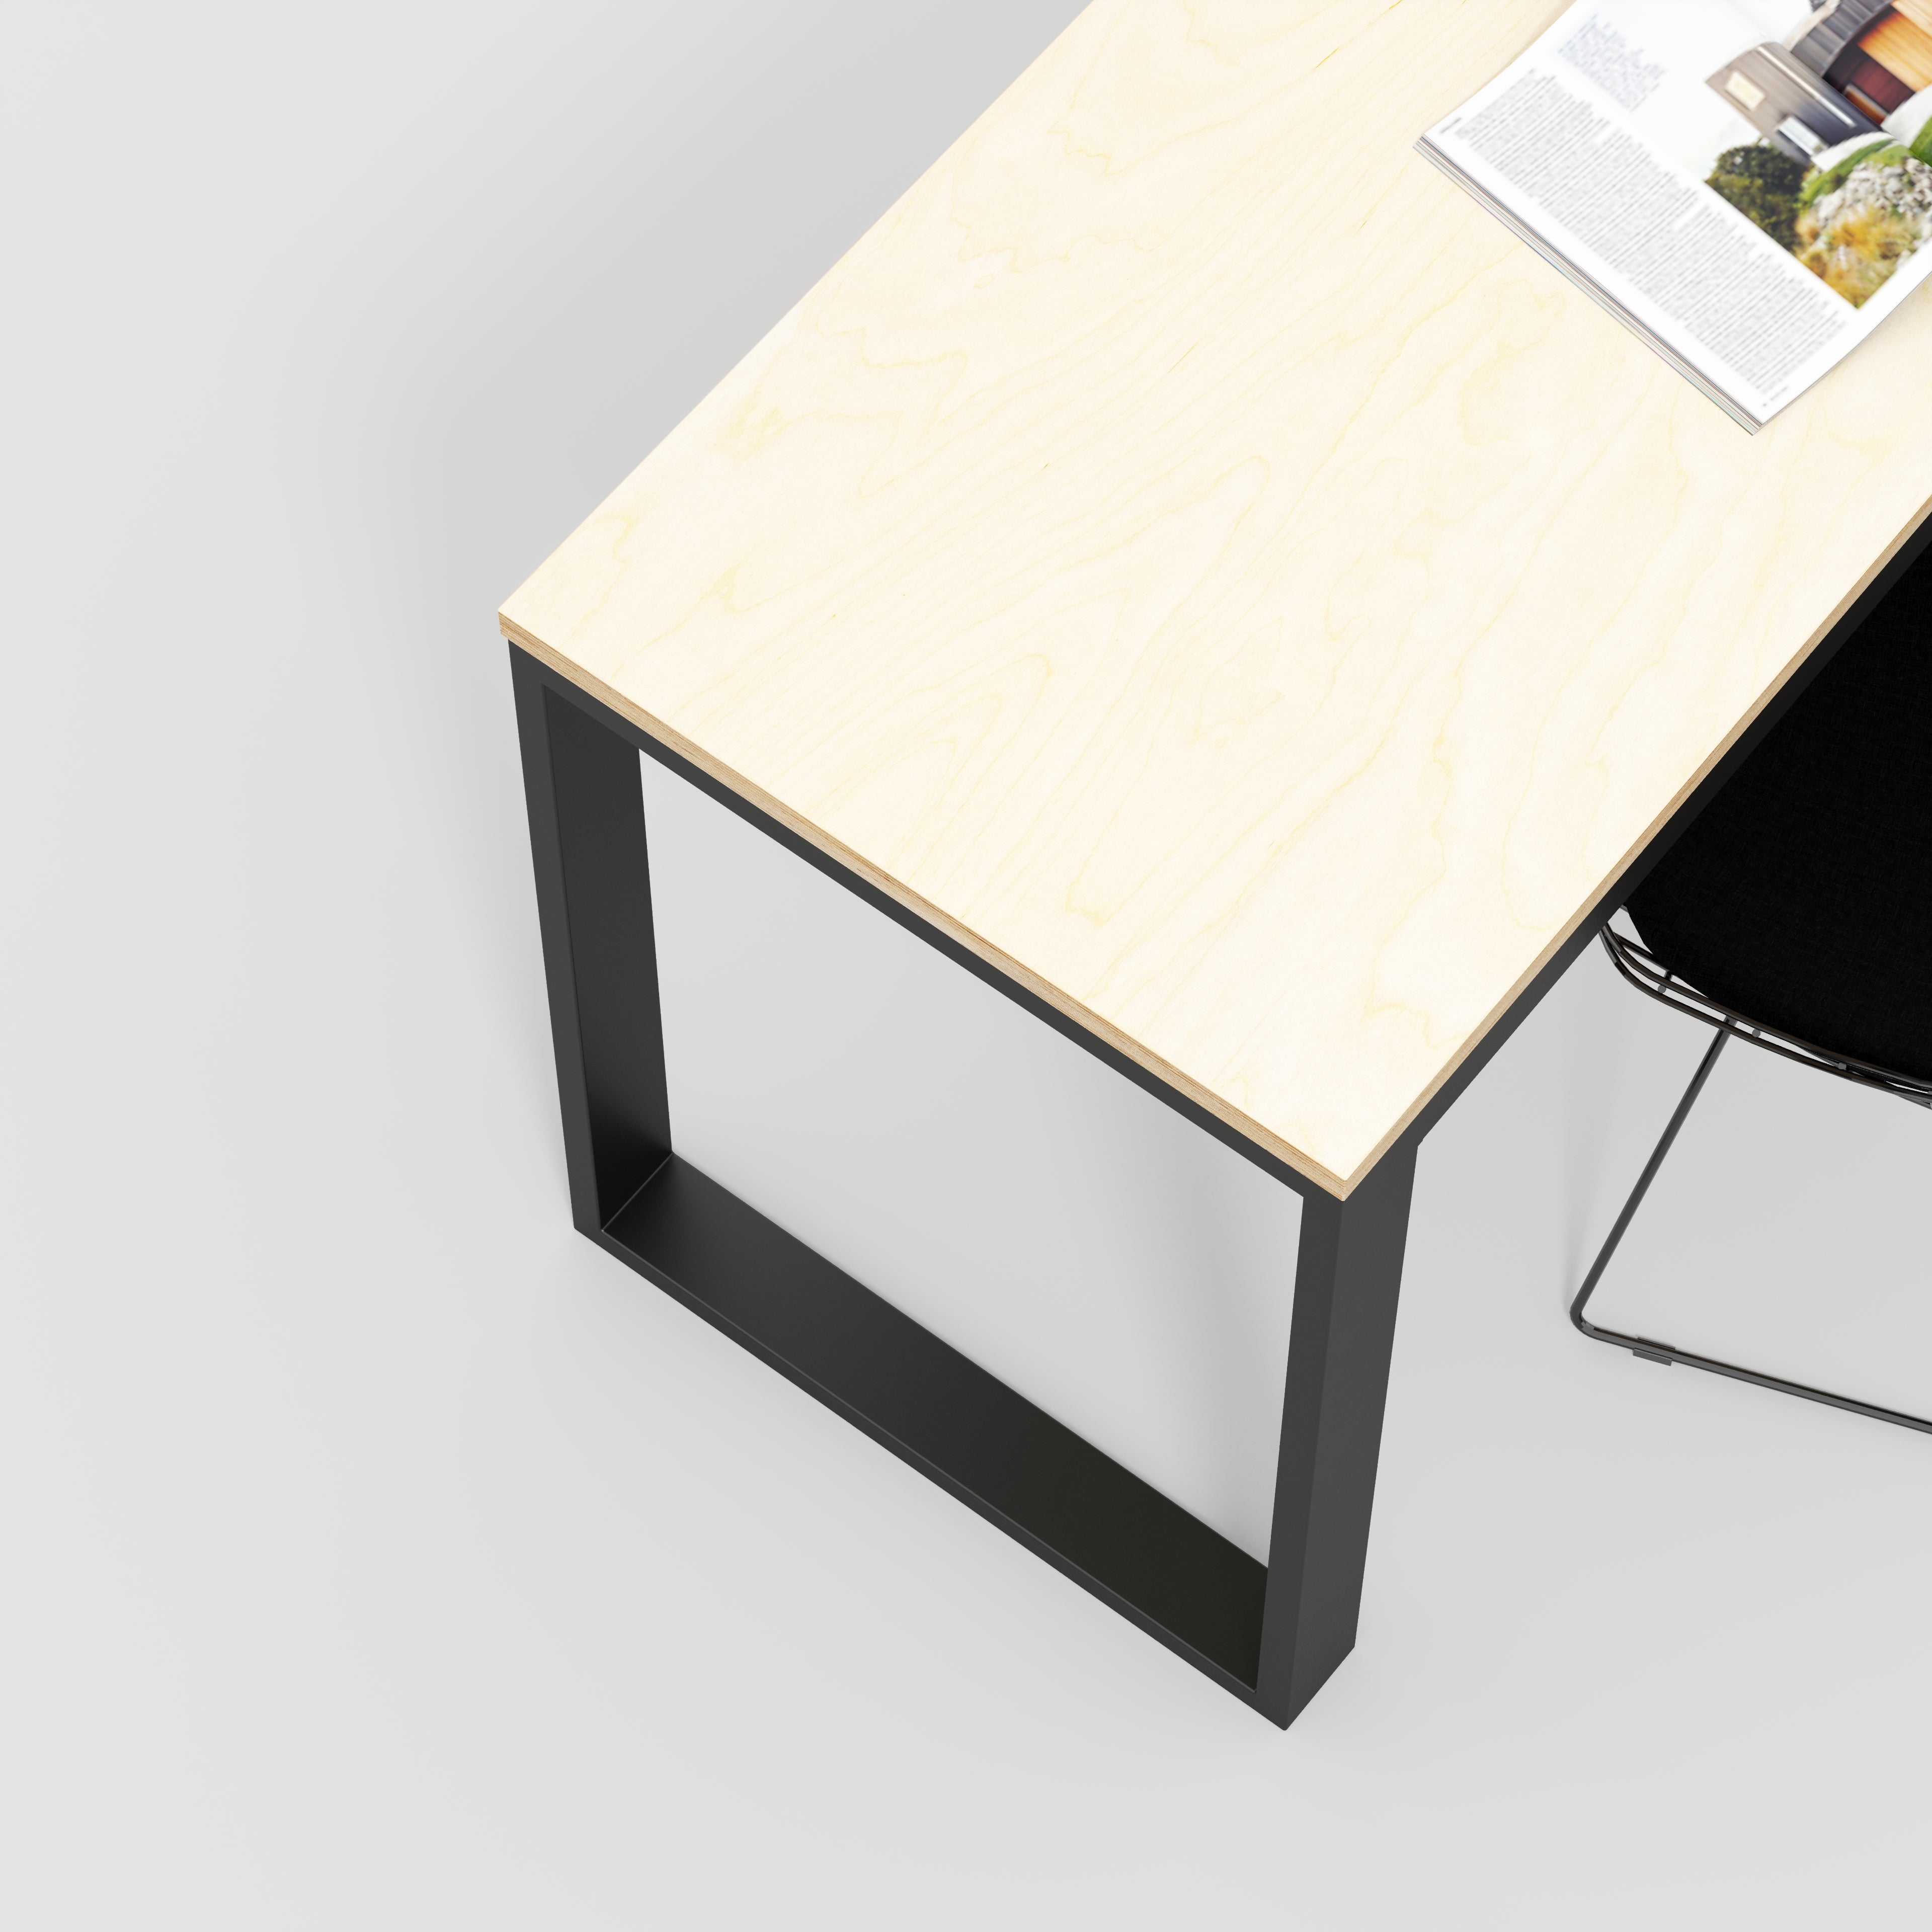 Custom Plywood Desk with Industrial Frame